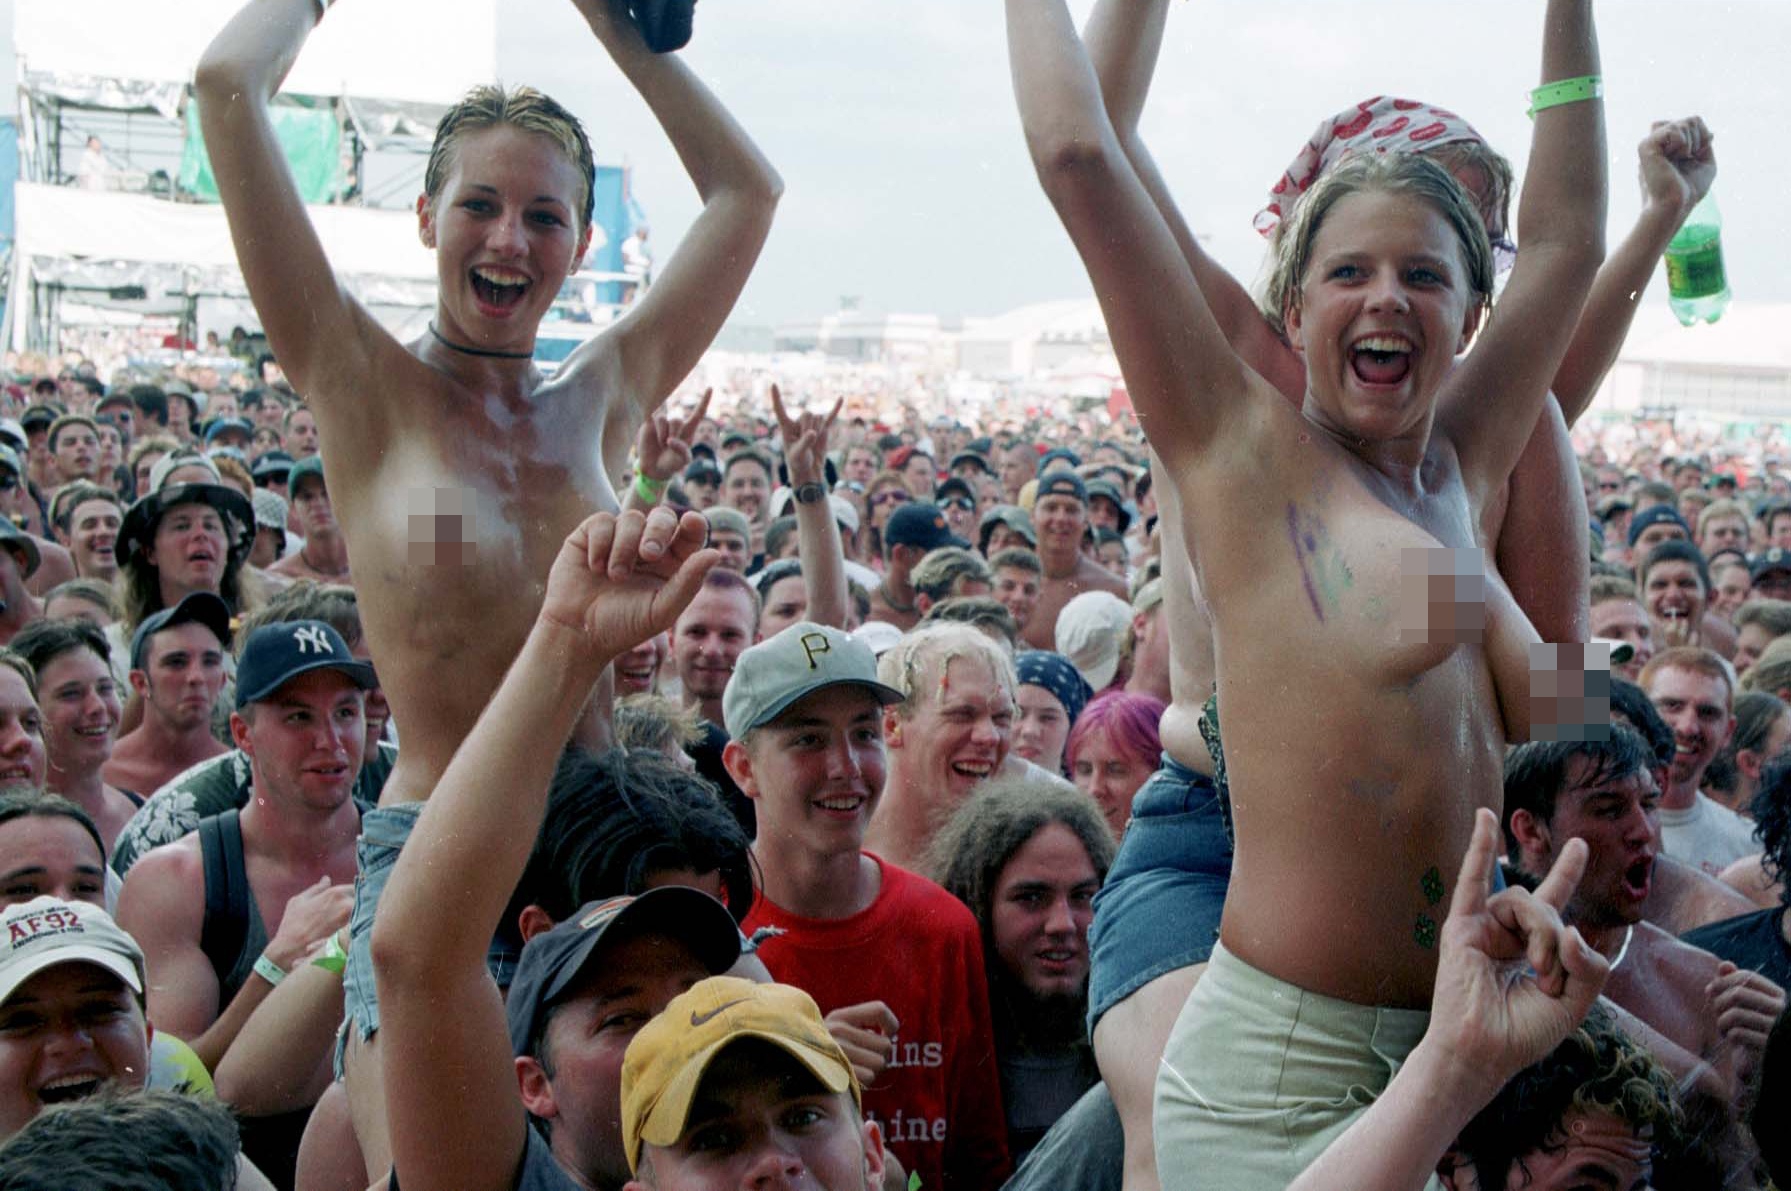 carma morgan recommends Woodstock 99 Topless